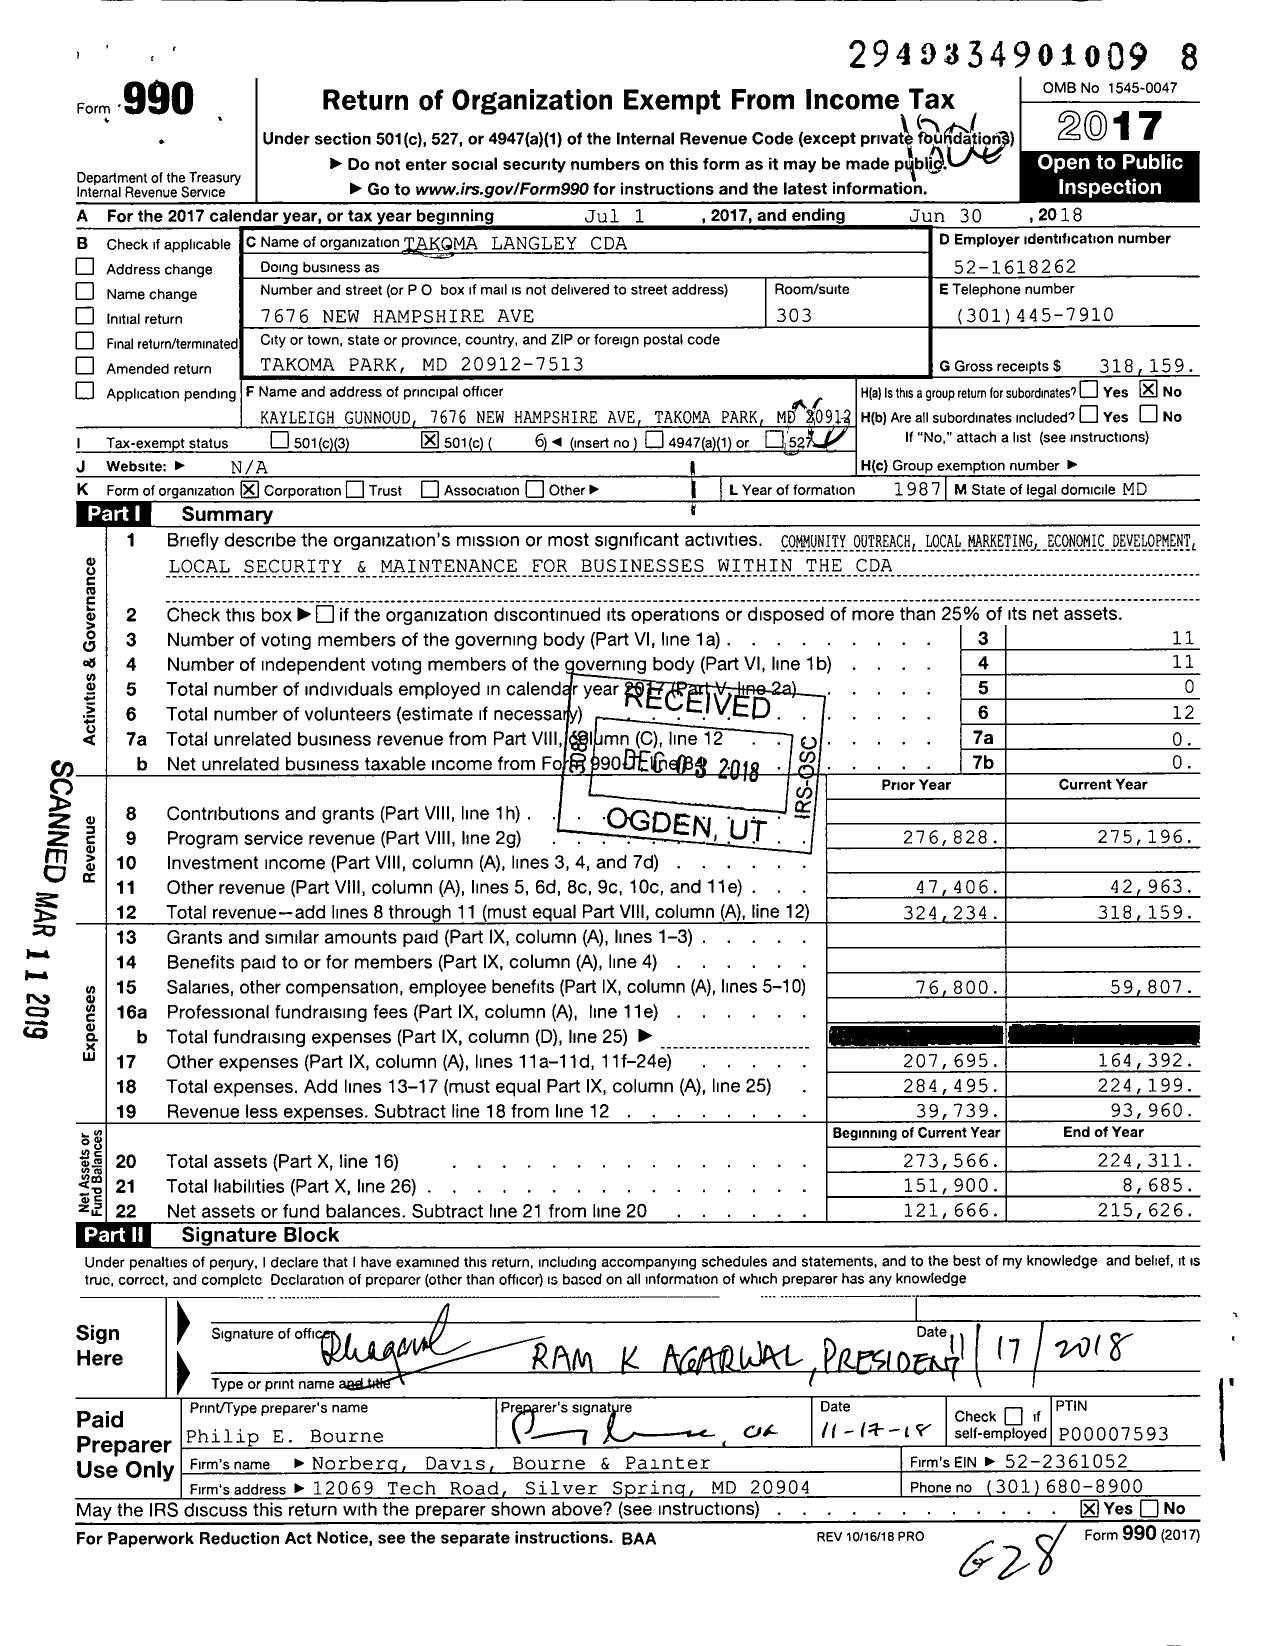 Image of first page of 2017 Form 990O for Takoma Langley Cda